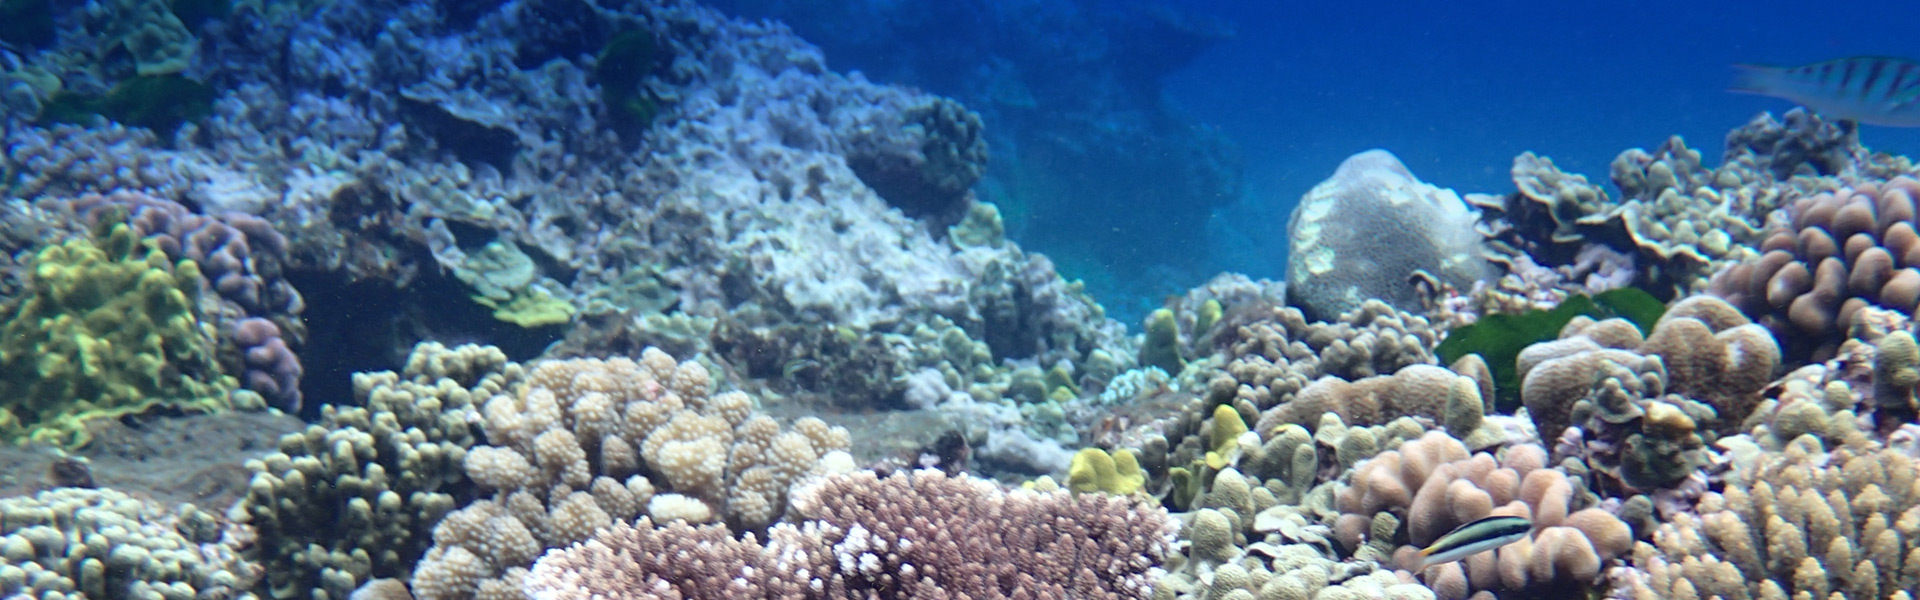 Digital Great Barrier Reef 